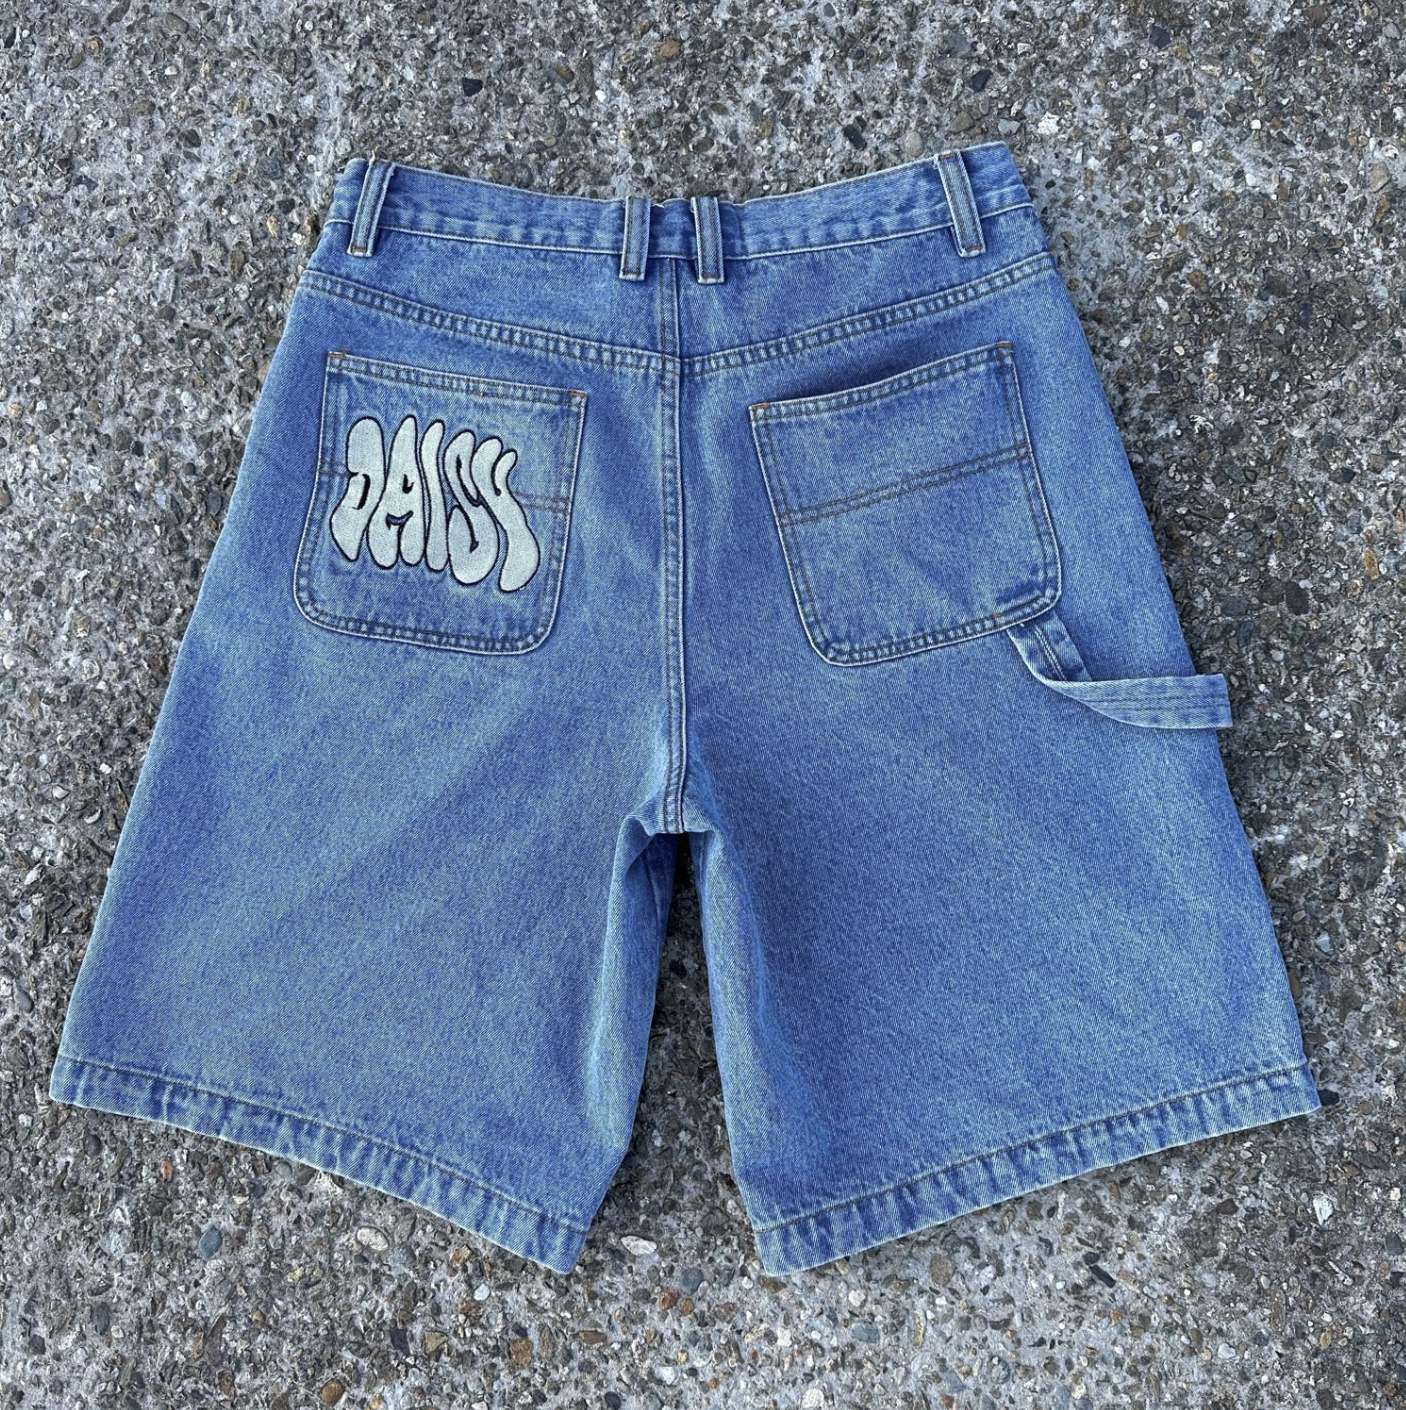 Pocket Full of Daisies Shorts (Jorts)